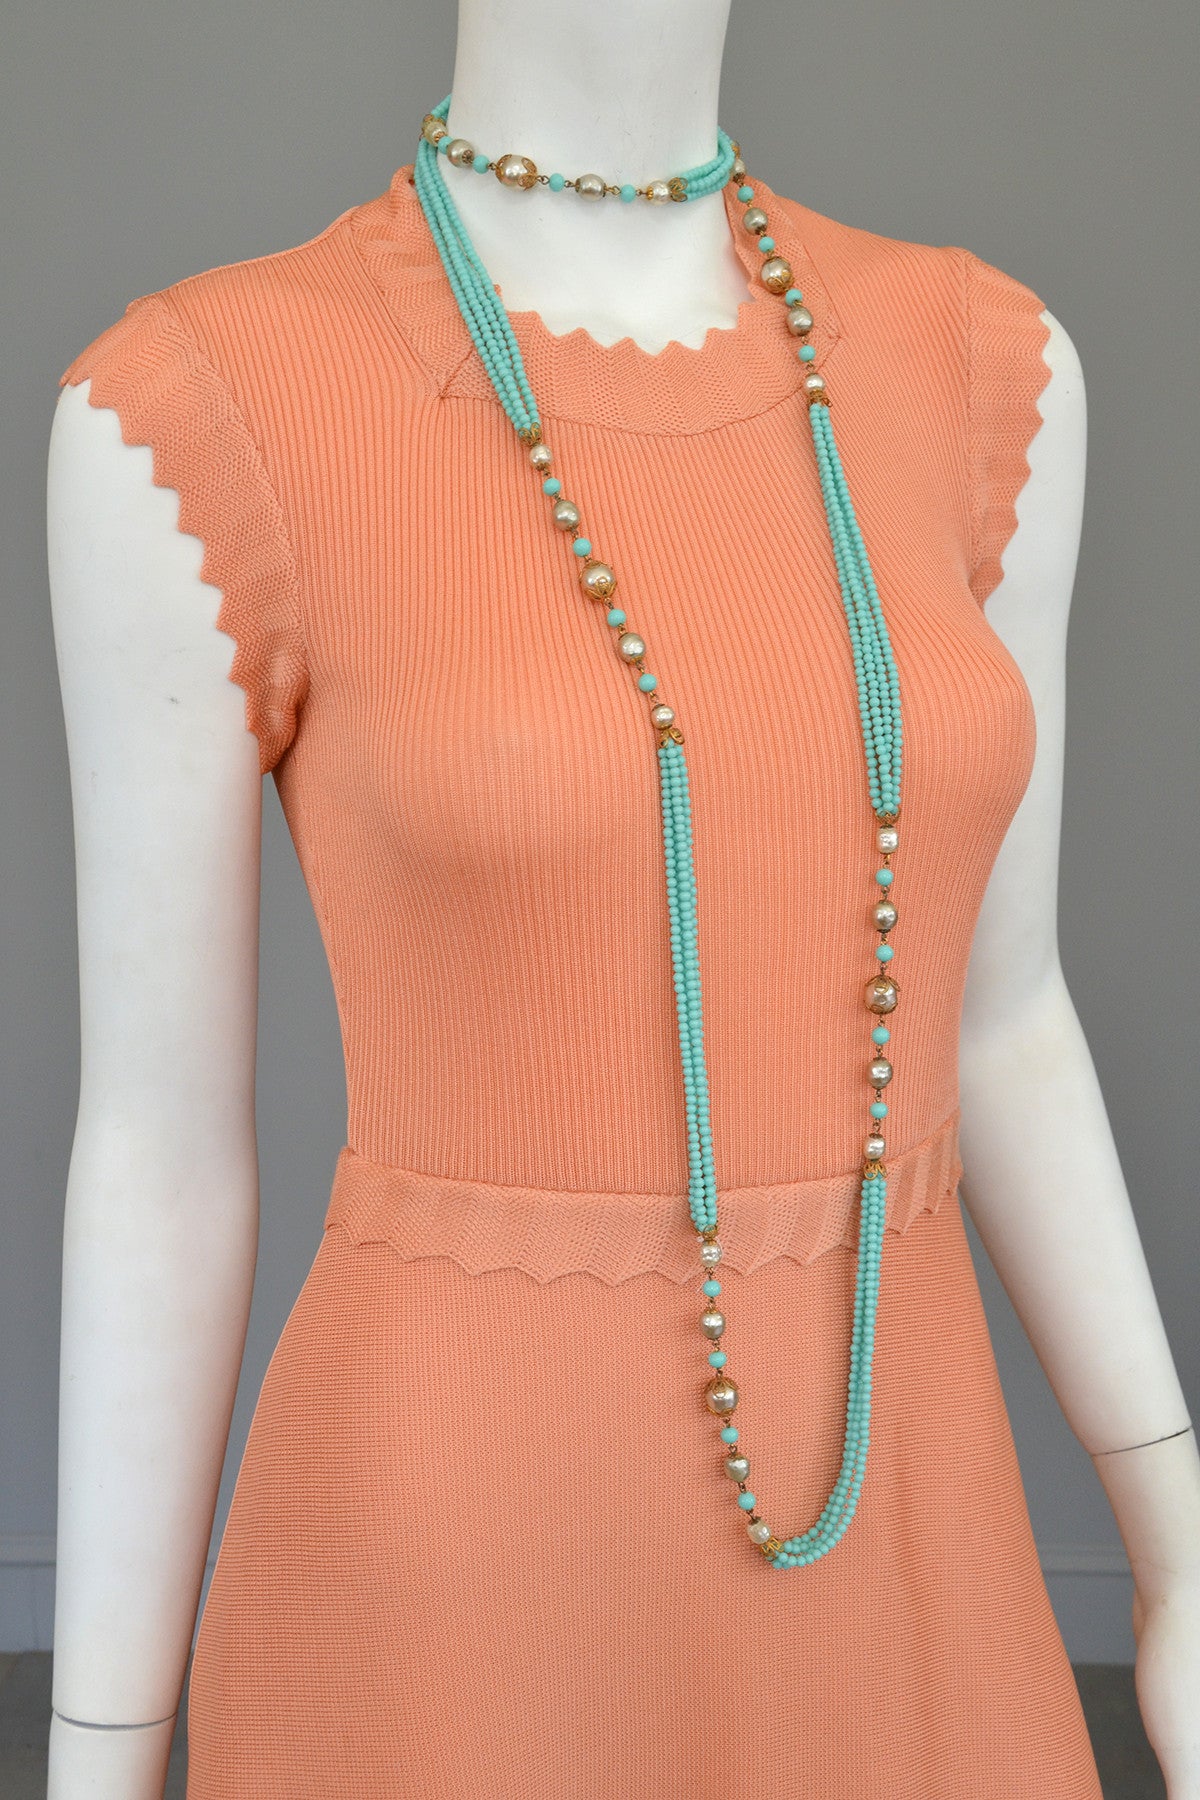 1970s Light Coral Italian Knit Dress with Long Peplum Skirt